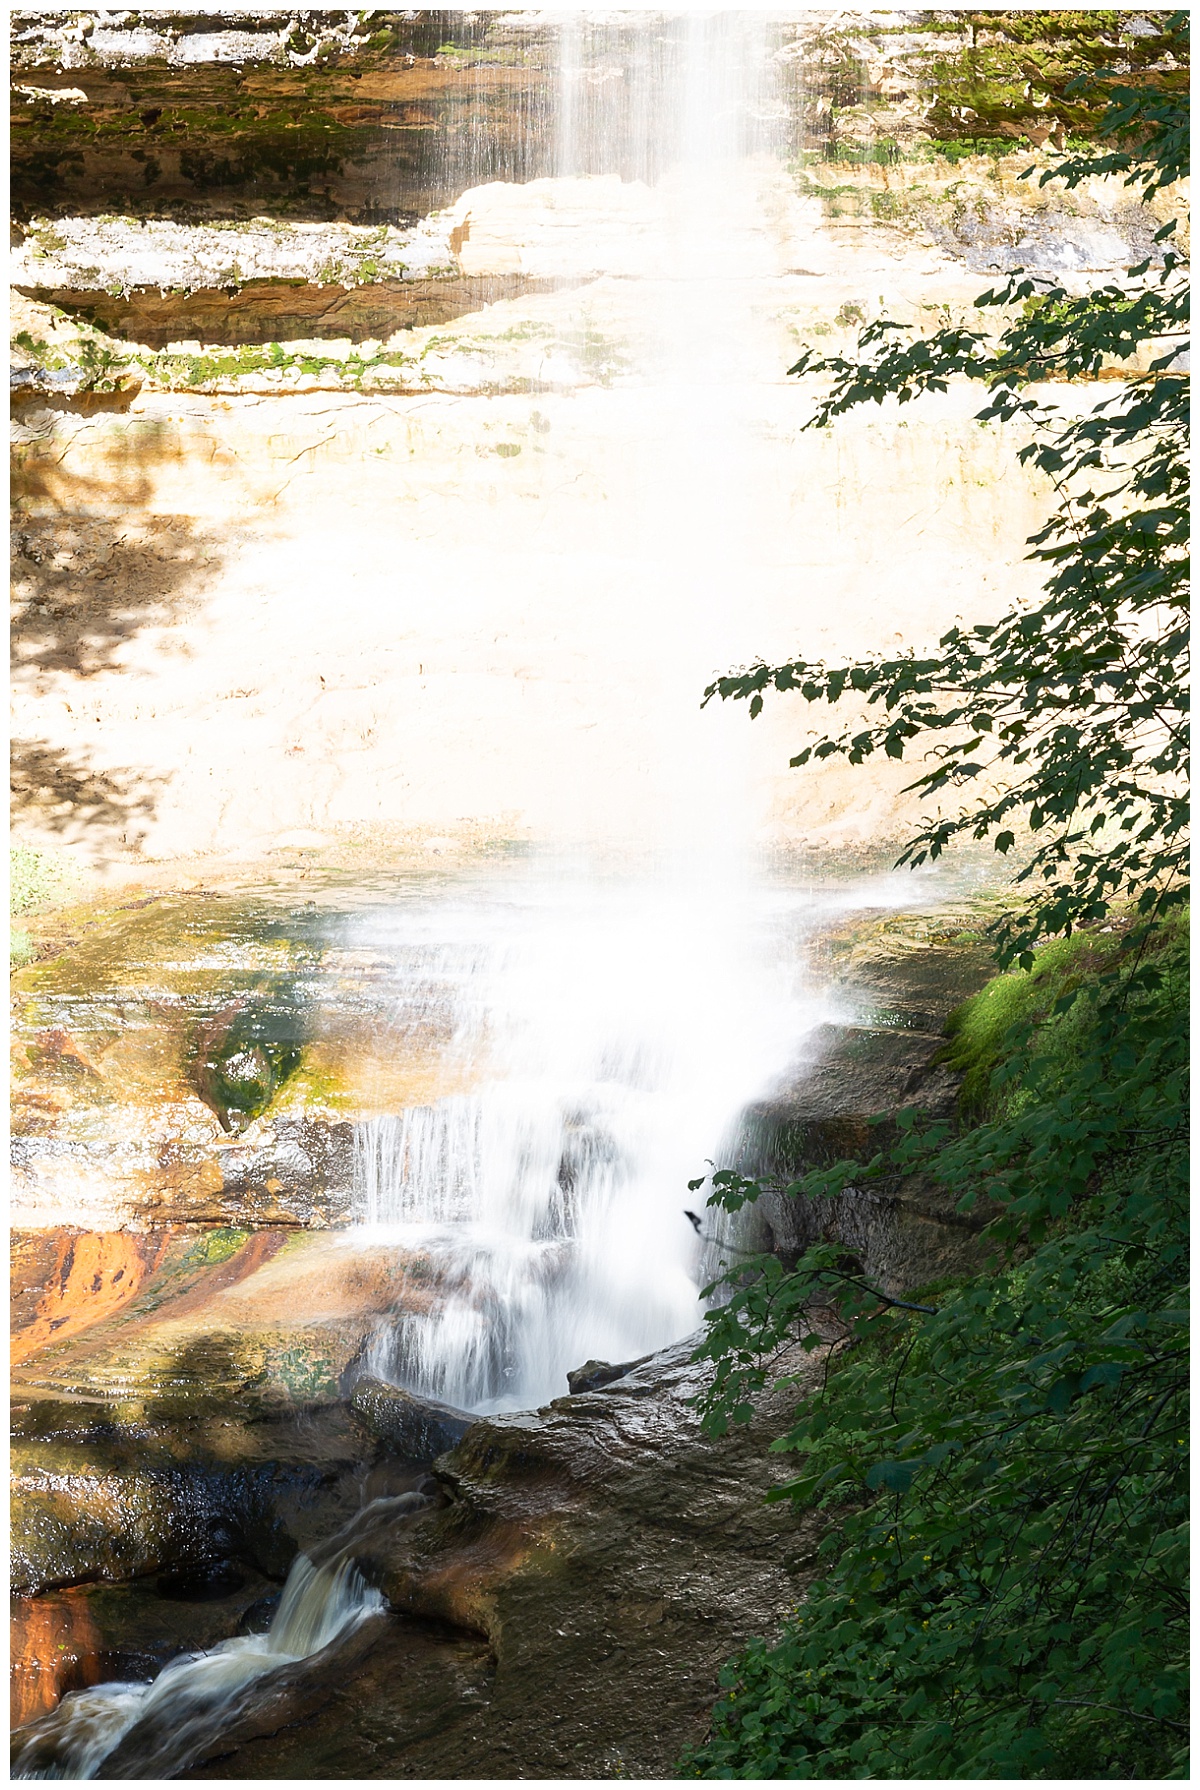 Munising Falls photo by Simply Seeking Photography